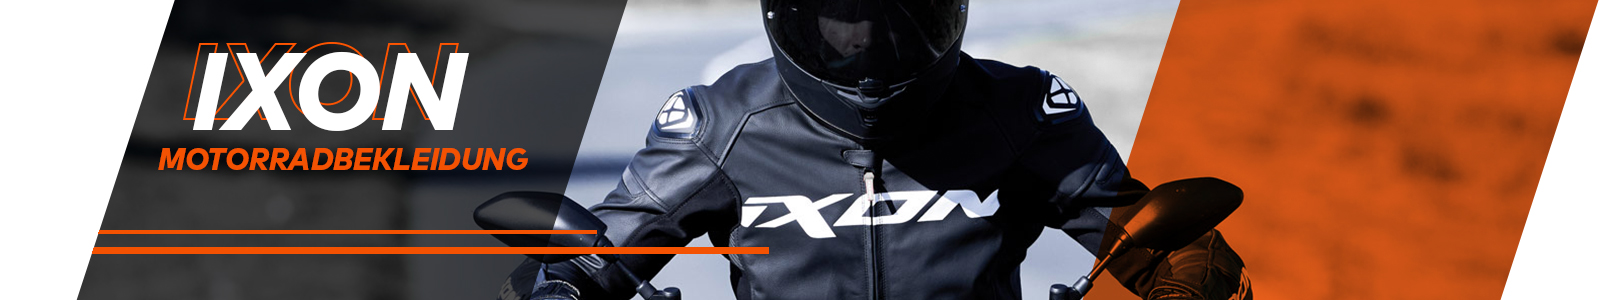 IXON Motorradbekleidung